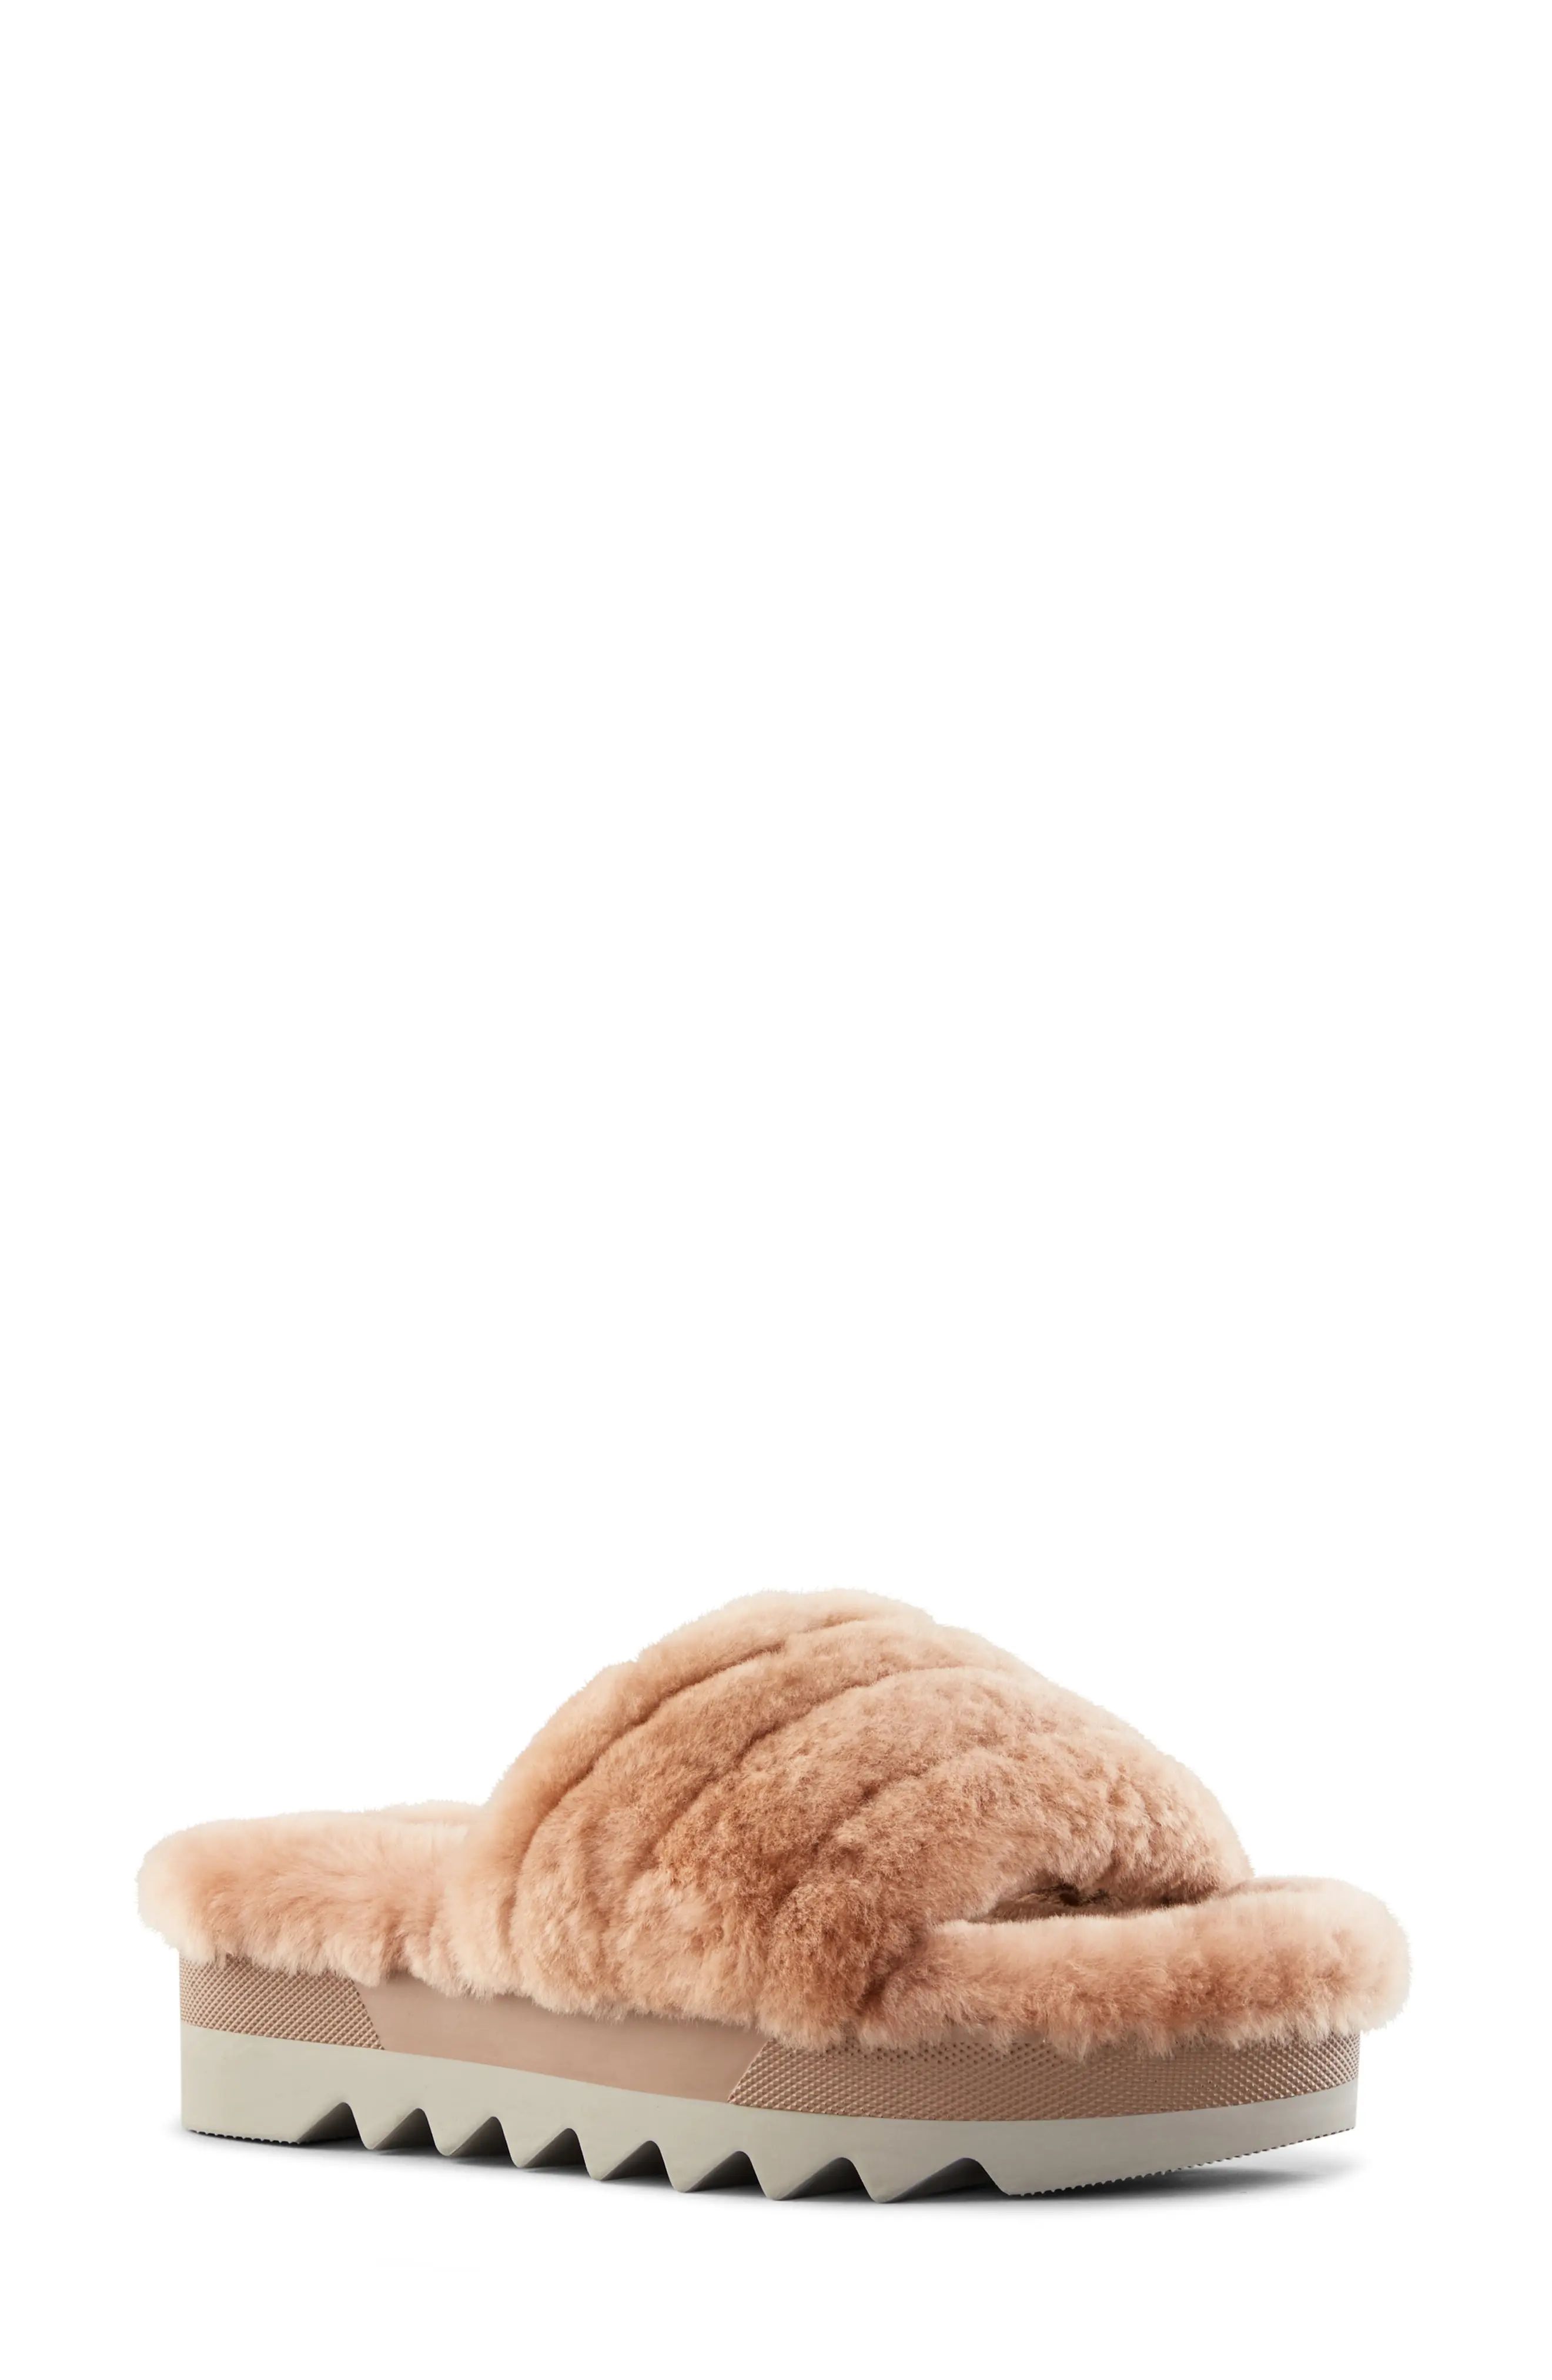 Cougar Pozy Genuine Shearling Slide Sandal in Oak at Nordstrom, Size 8 | Nordstrom